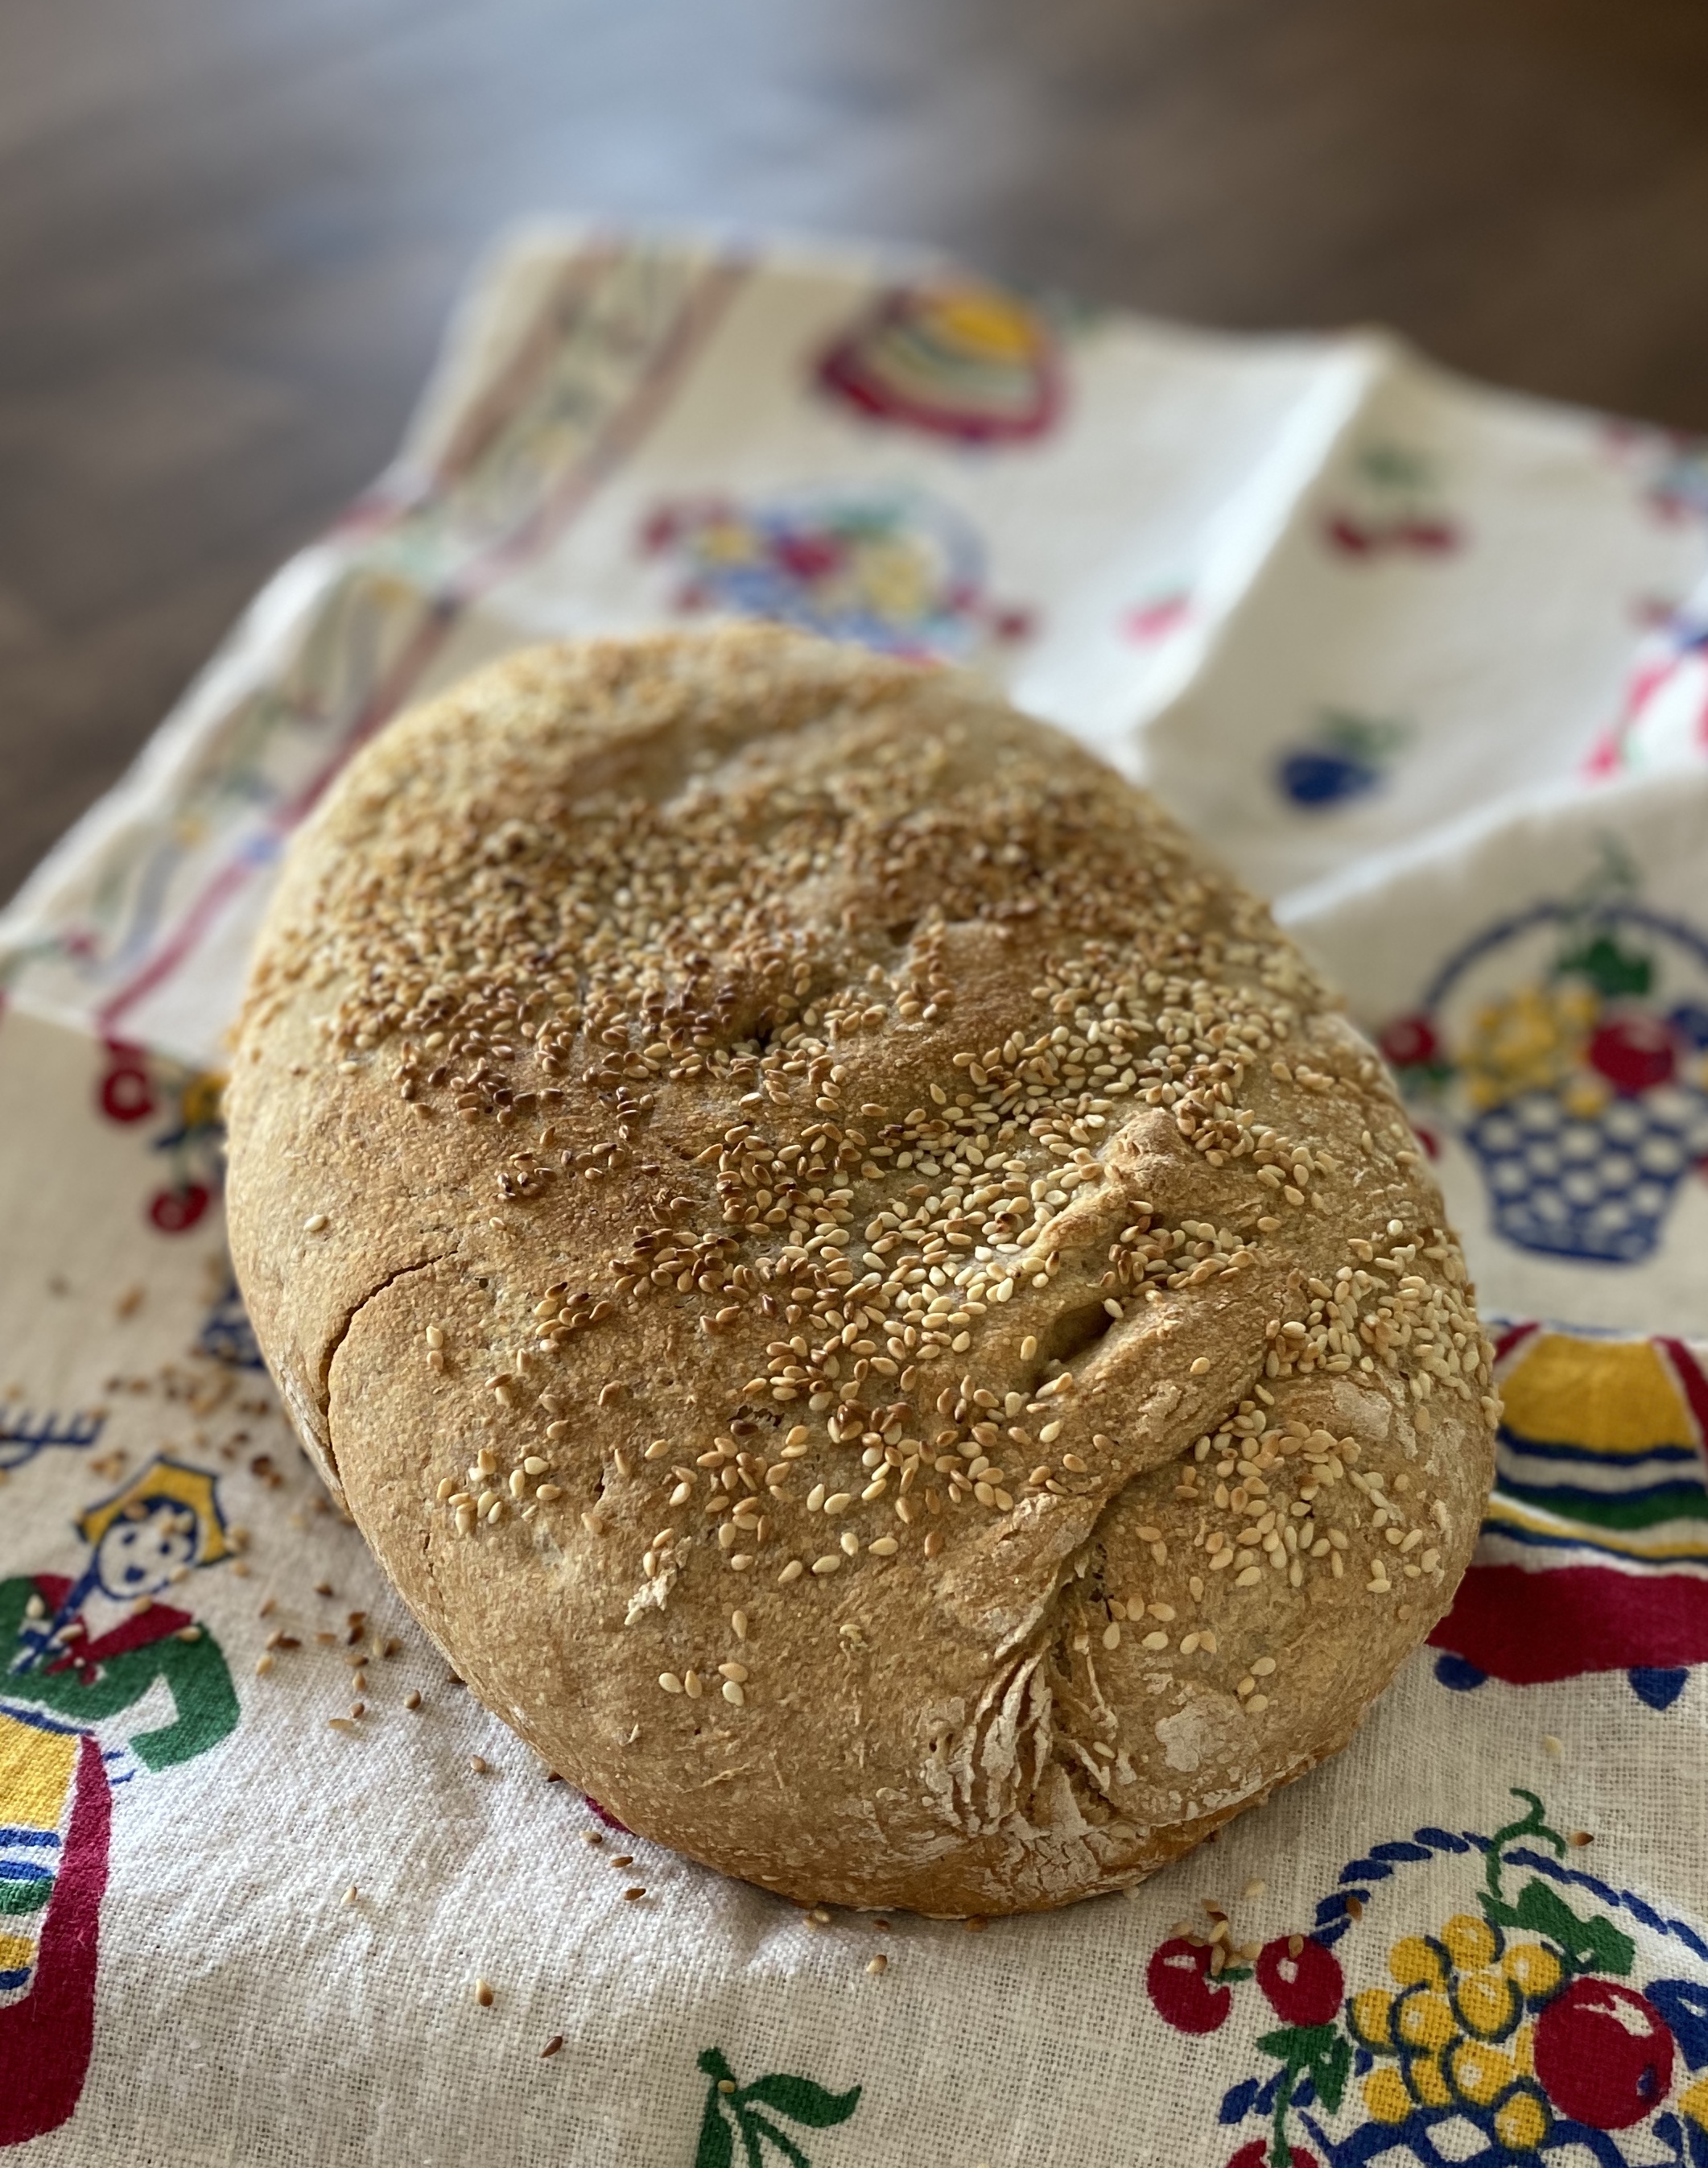 Slow Cooker Bread